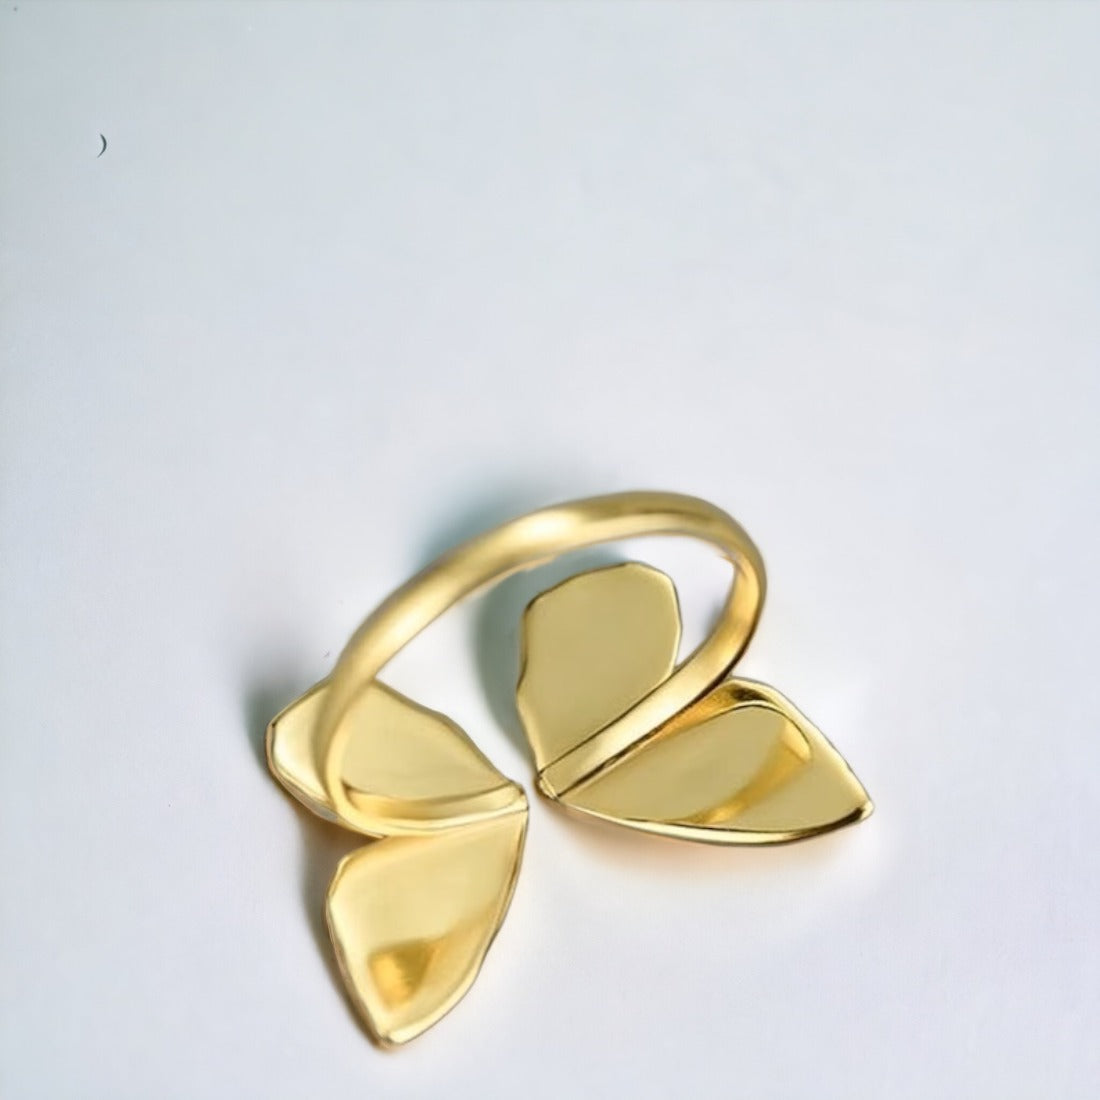 Gold Butterfly Ring For Women & Girls